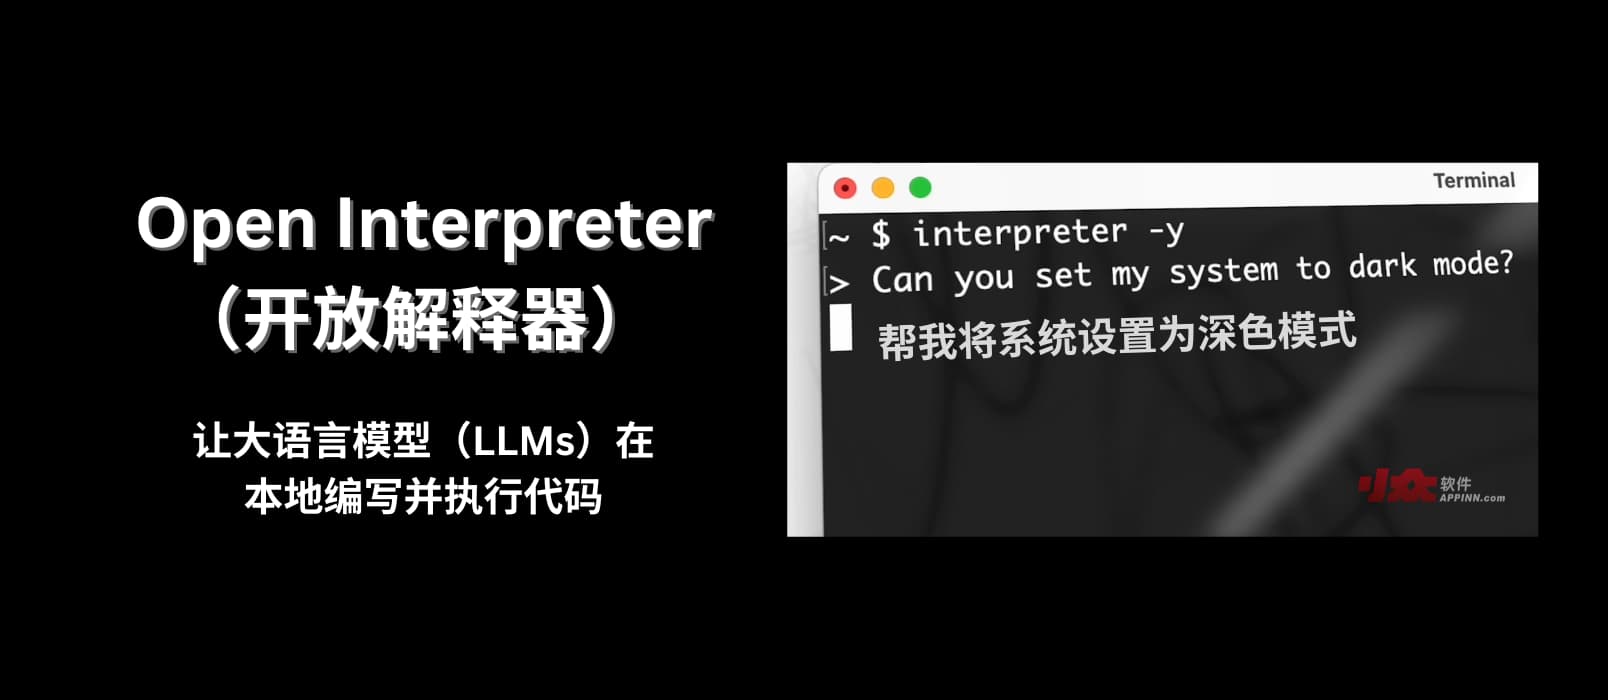 Open Interpreter – 可能门槛最低，让 AI 在你的电脑上执行代码